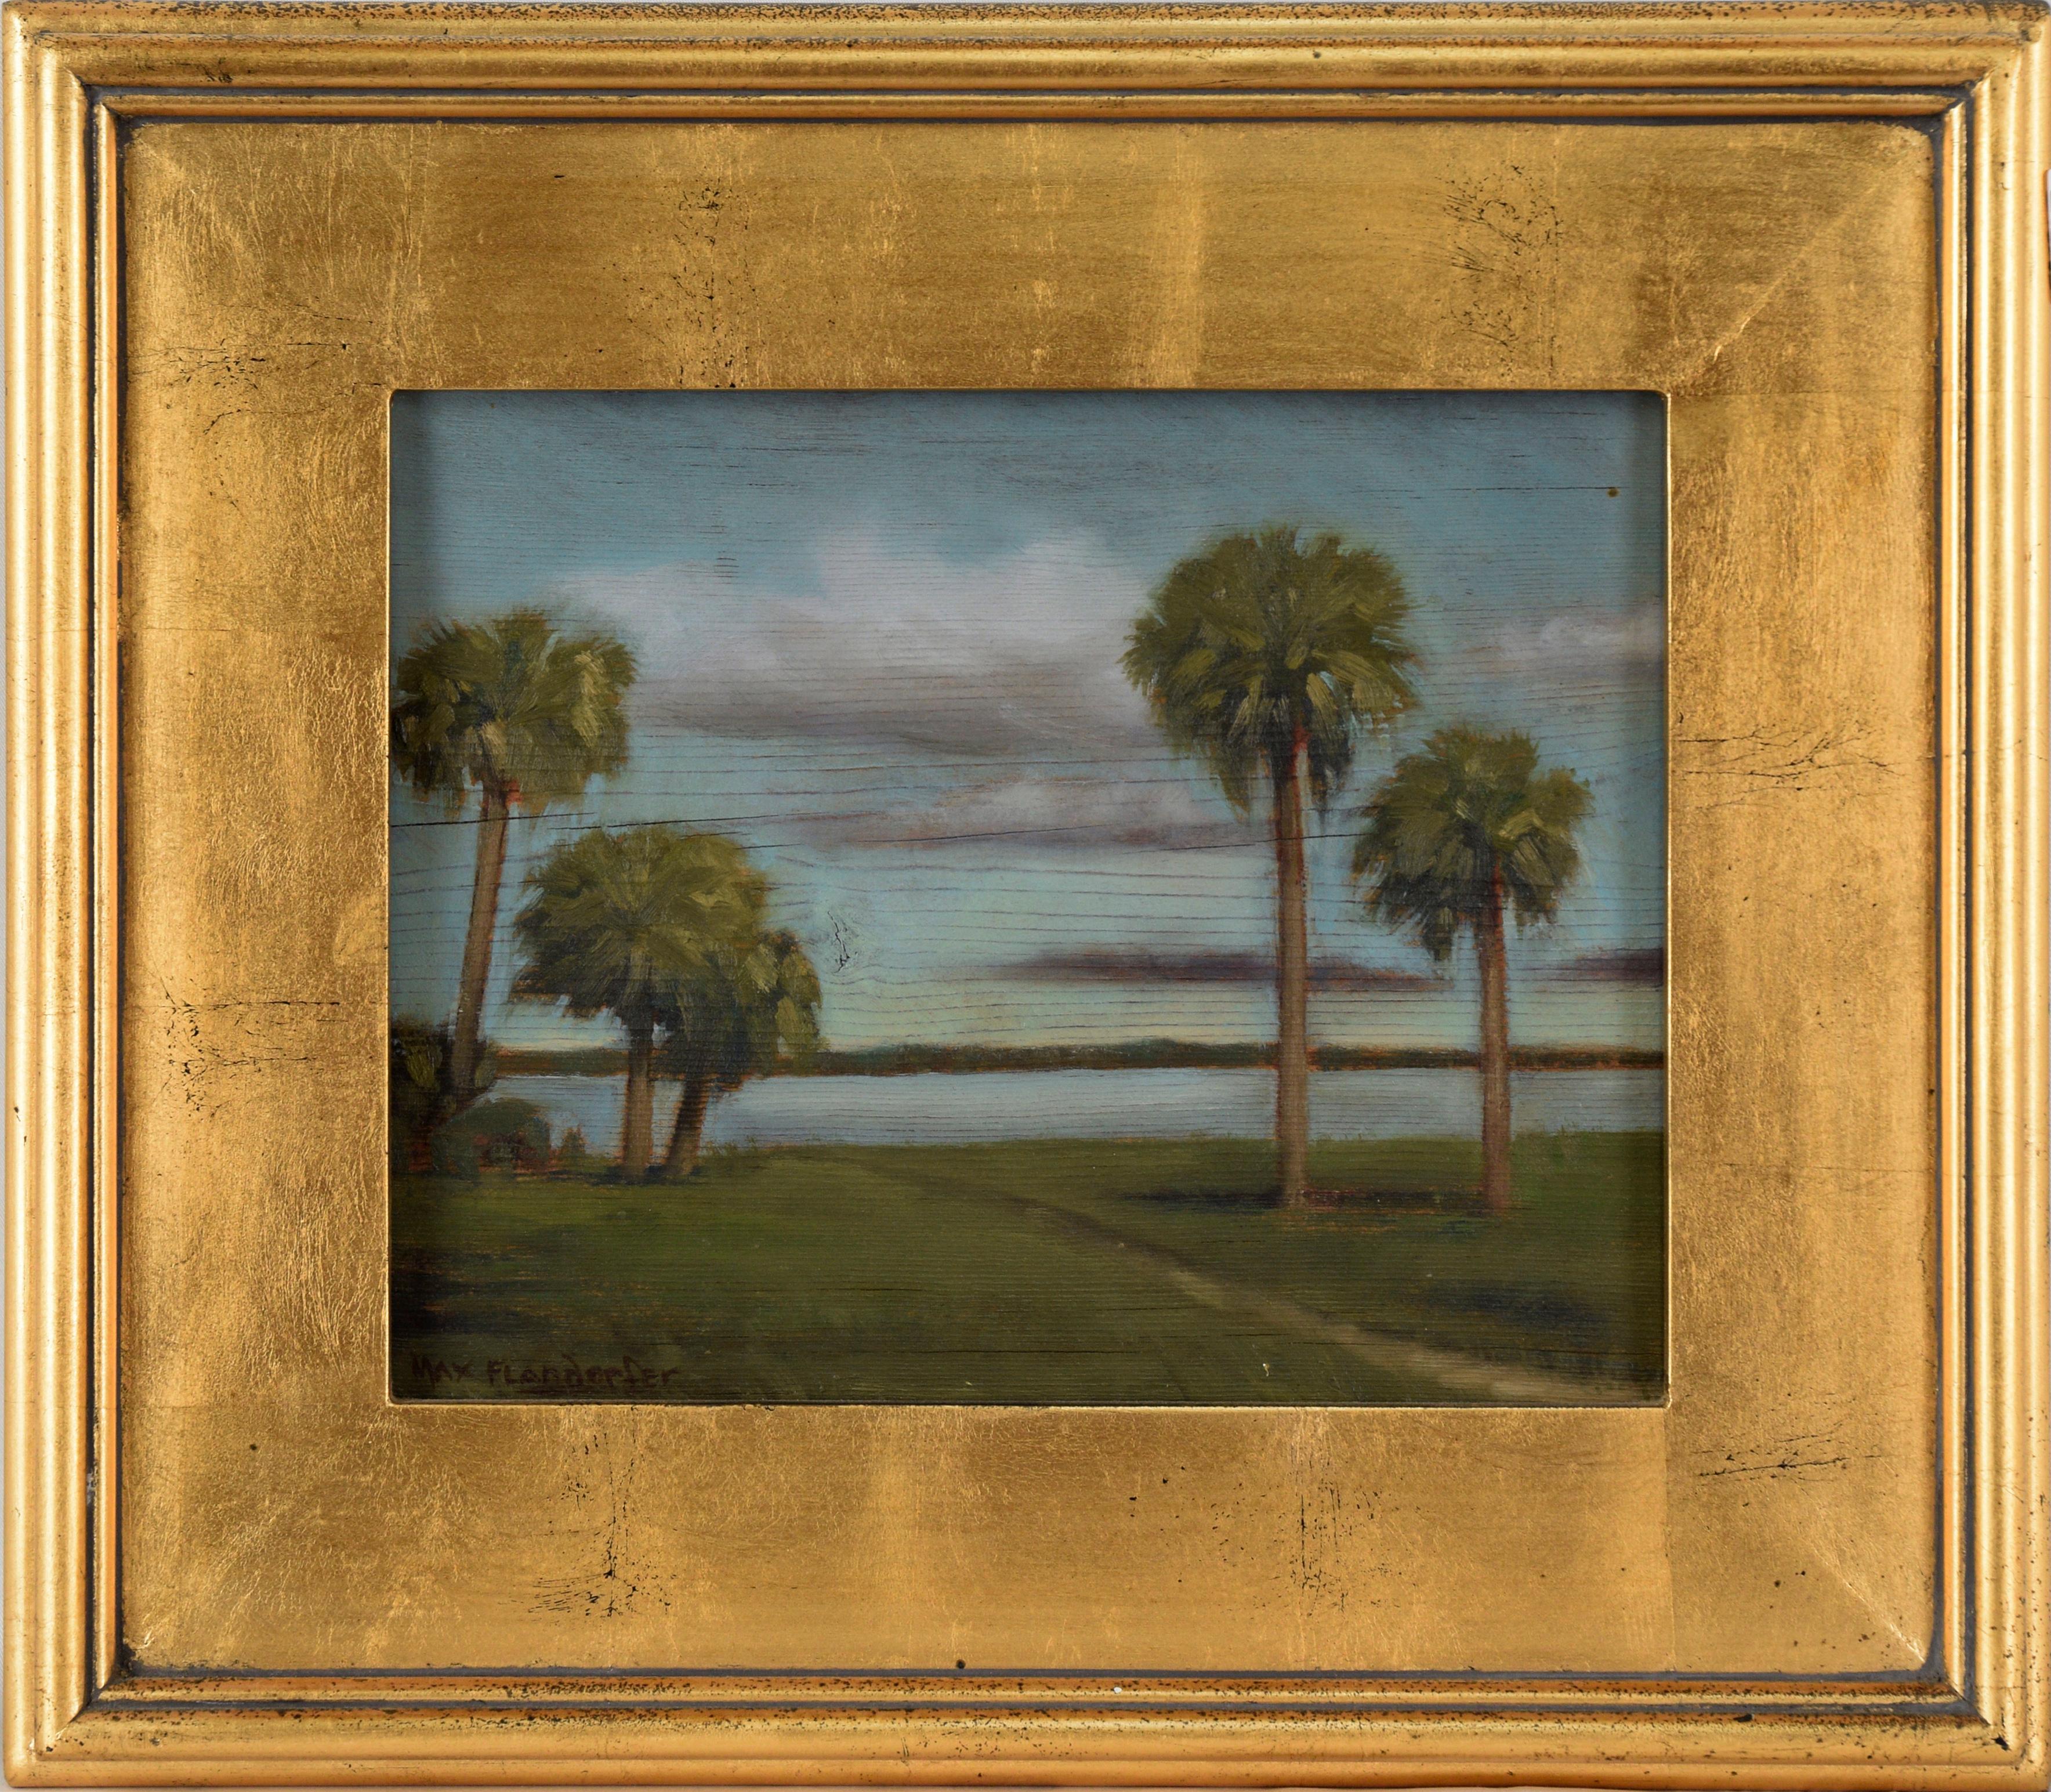 Max Flandorfer Landscape Painting - "Gulf Coast Evening" Florida Seascape in Oil on Wood Panel